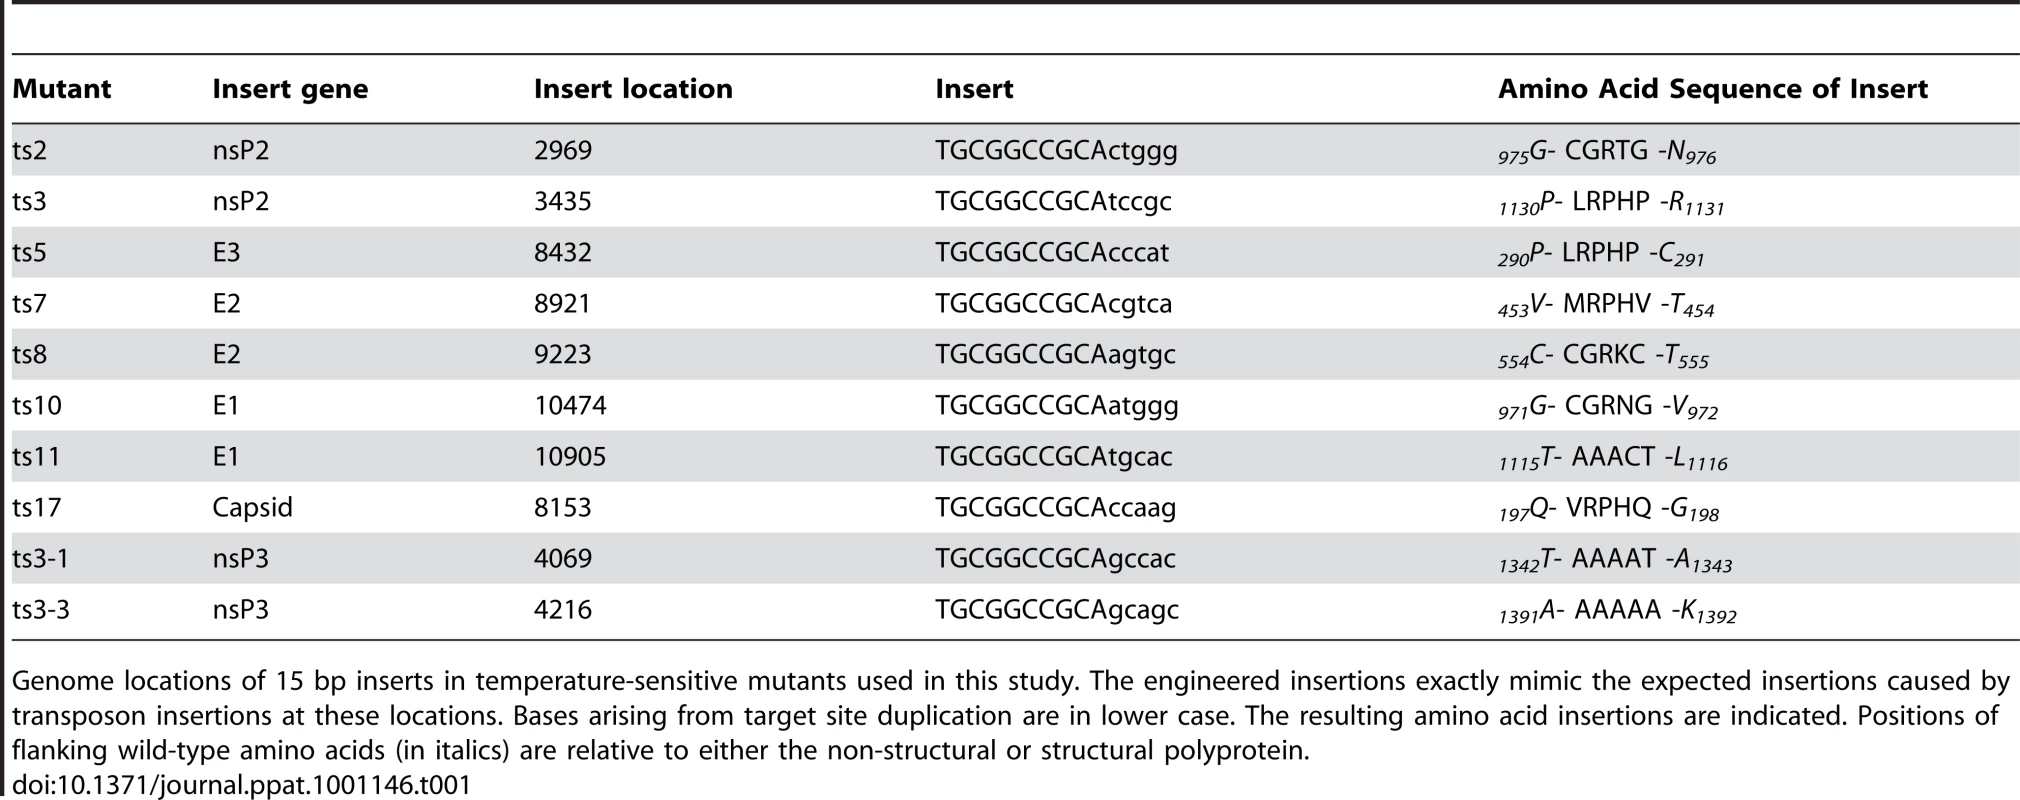 Locations of temperature sensitive mutant insertions.